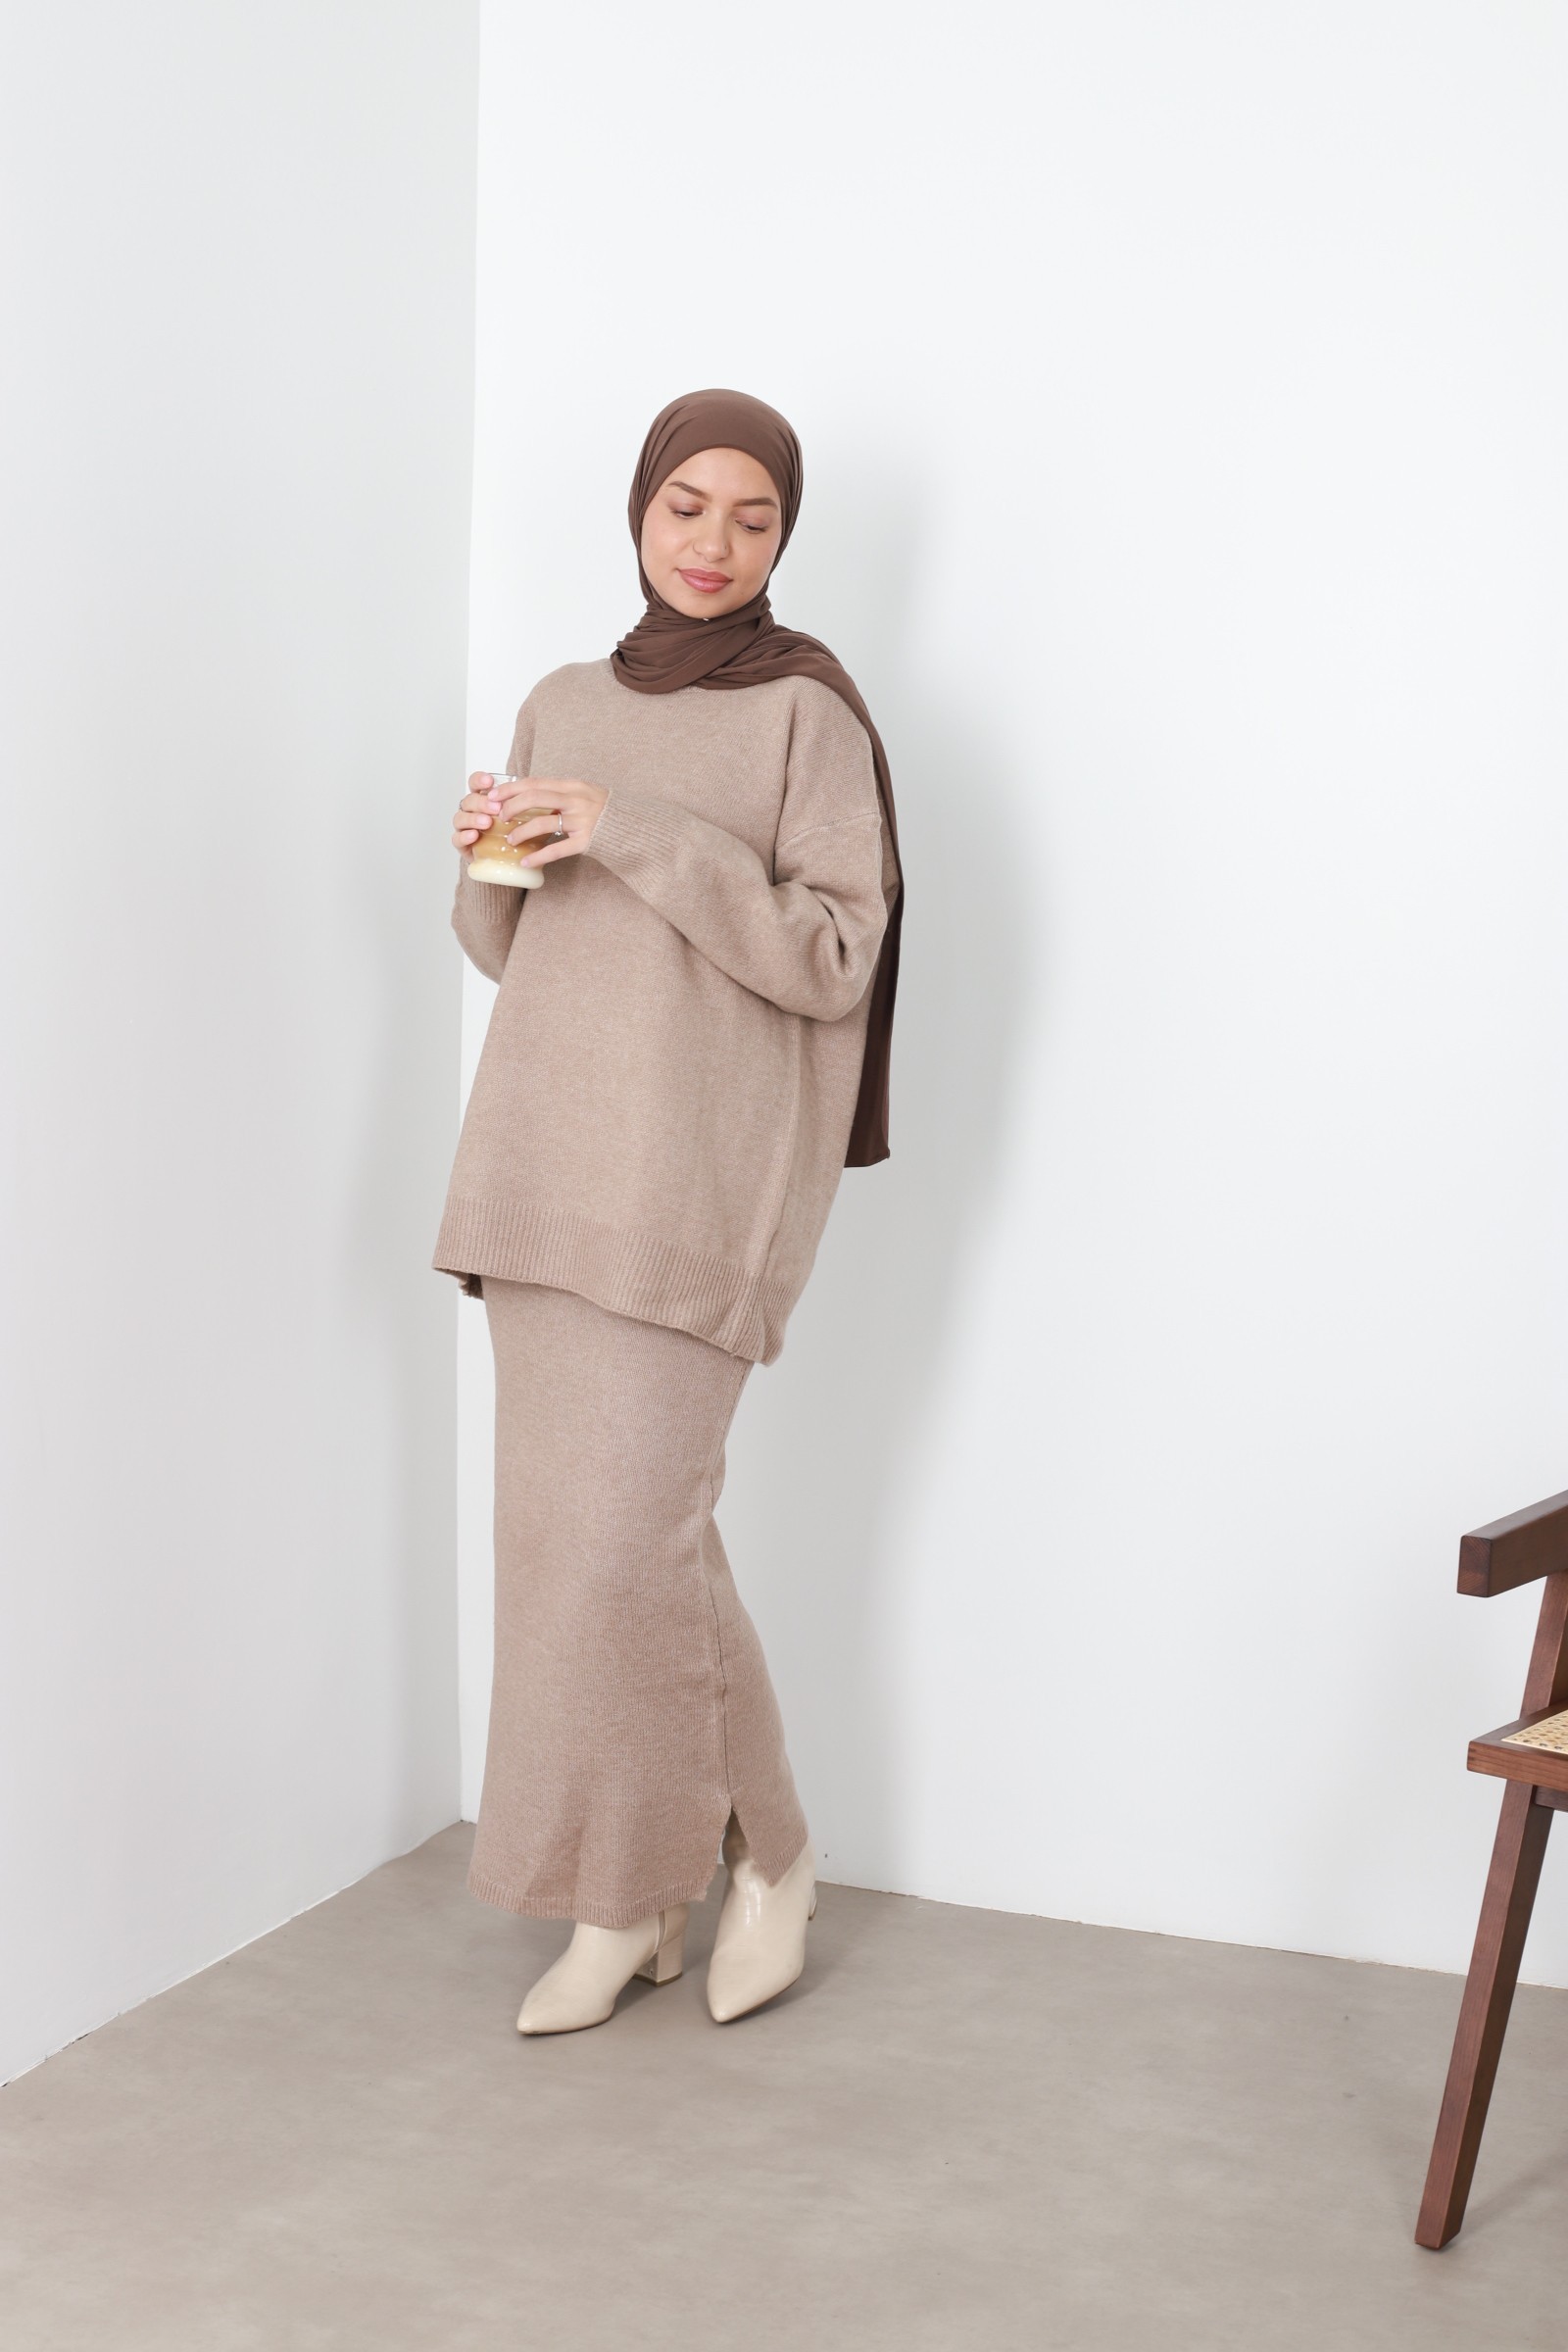 Ensemble jupe modeste fashion femme hidjab